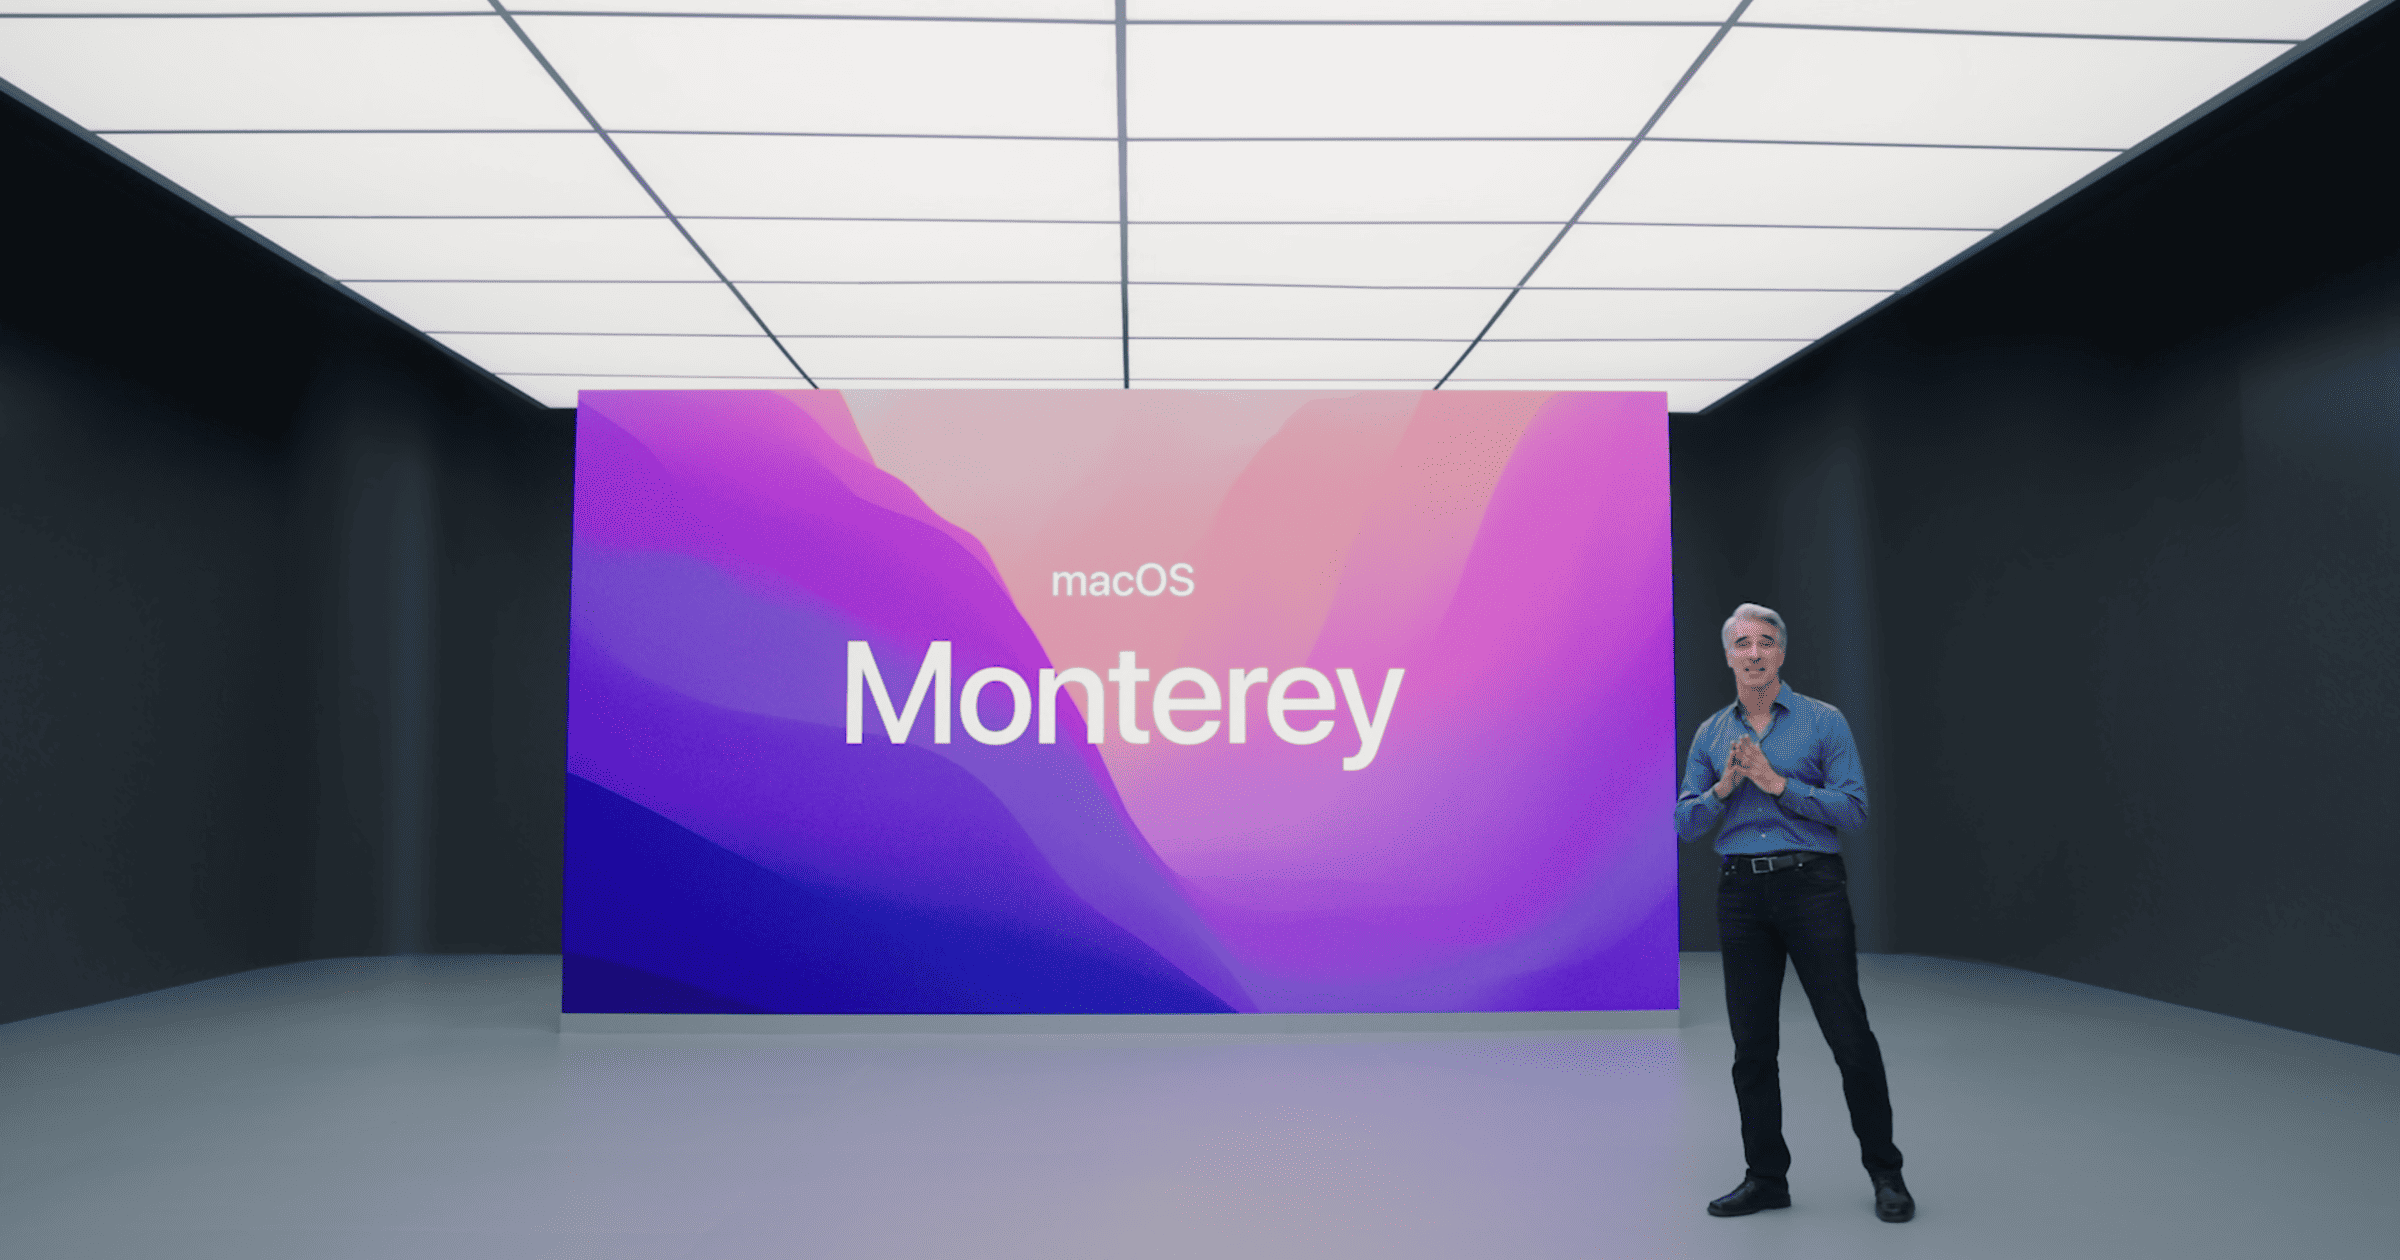 macOS Monterey announcement